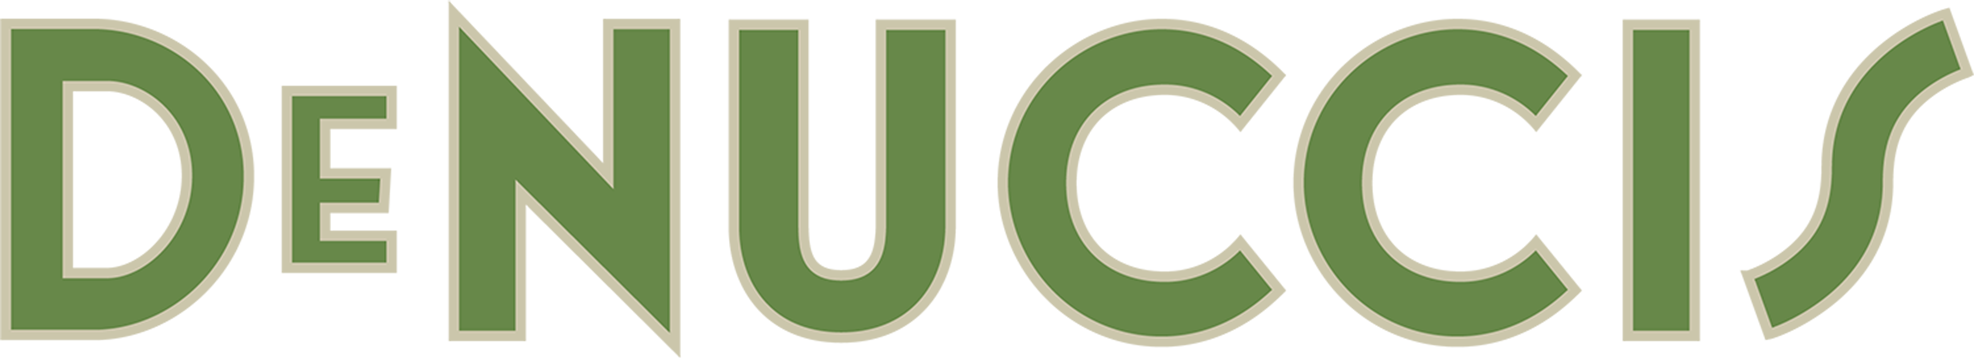 DeNuccis logo